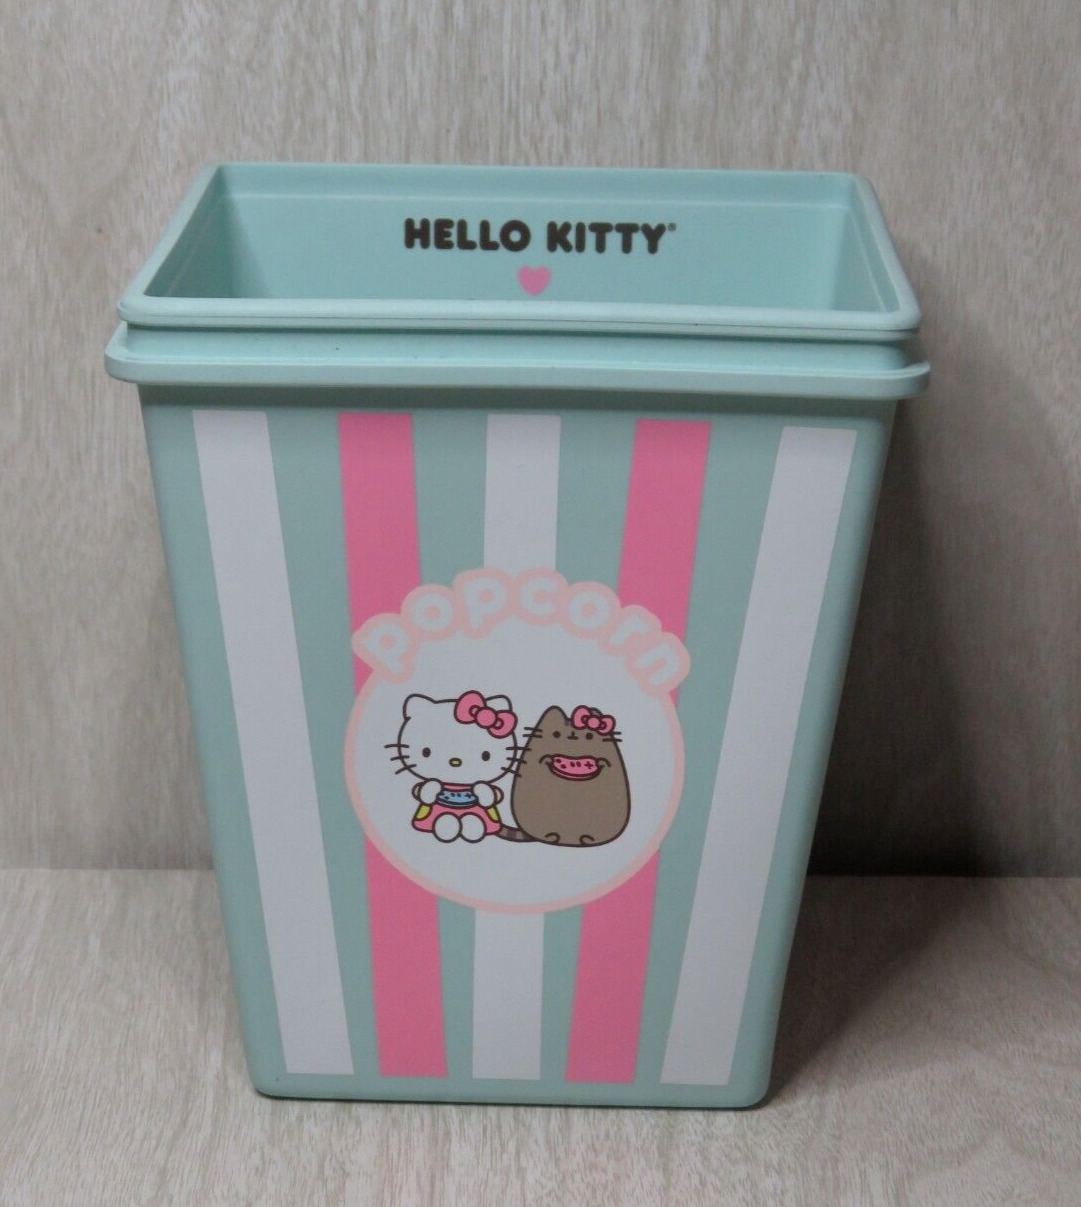 Sanrio Pusheen Hello Kitty Silicone Popcorn Maker Bucket Pink Green READ